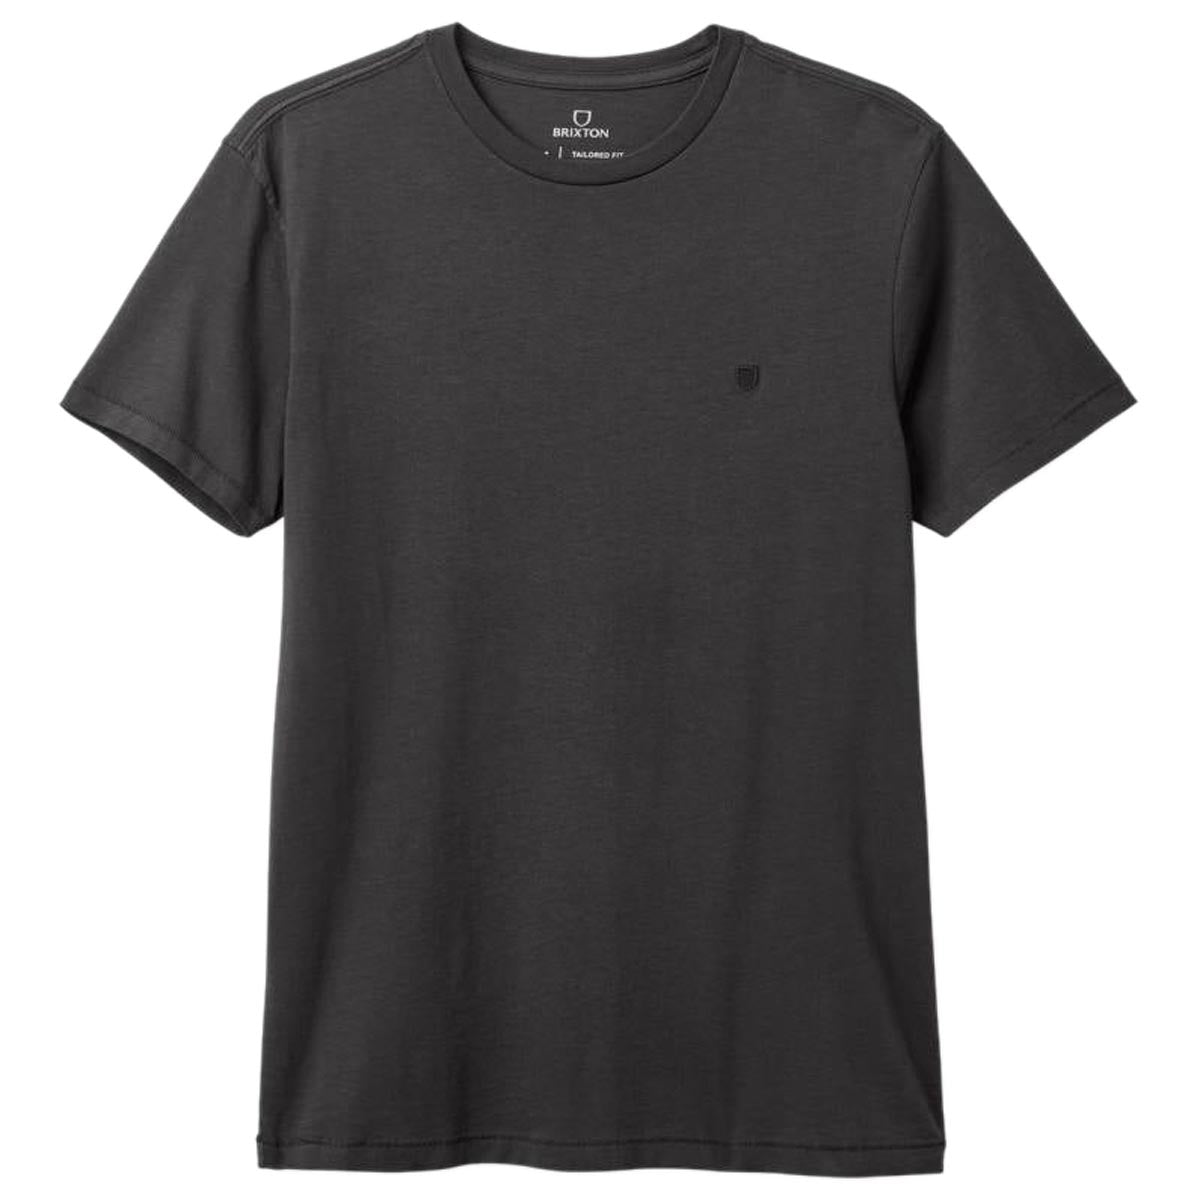 Brixton Vintage Reserve T-Shirt - Black Sol Wash image 1